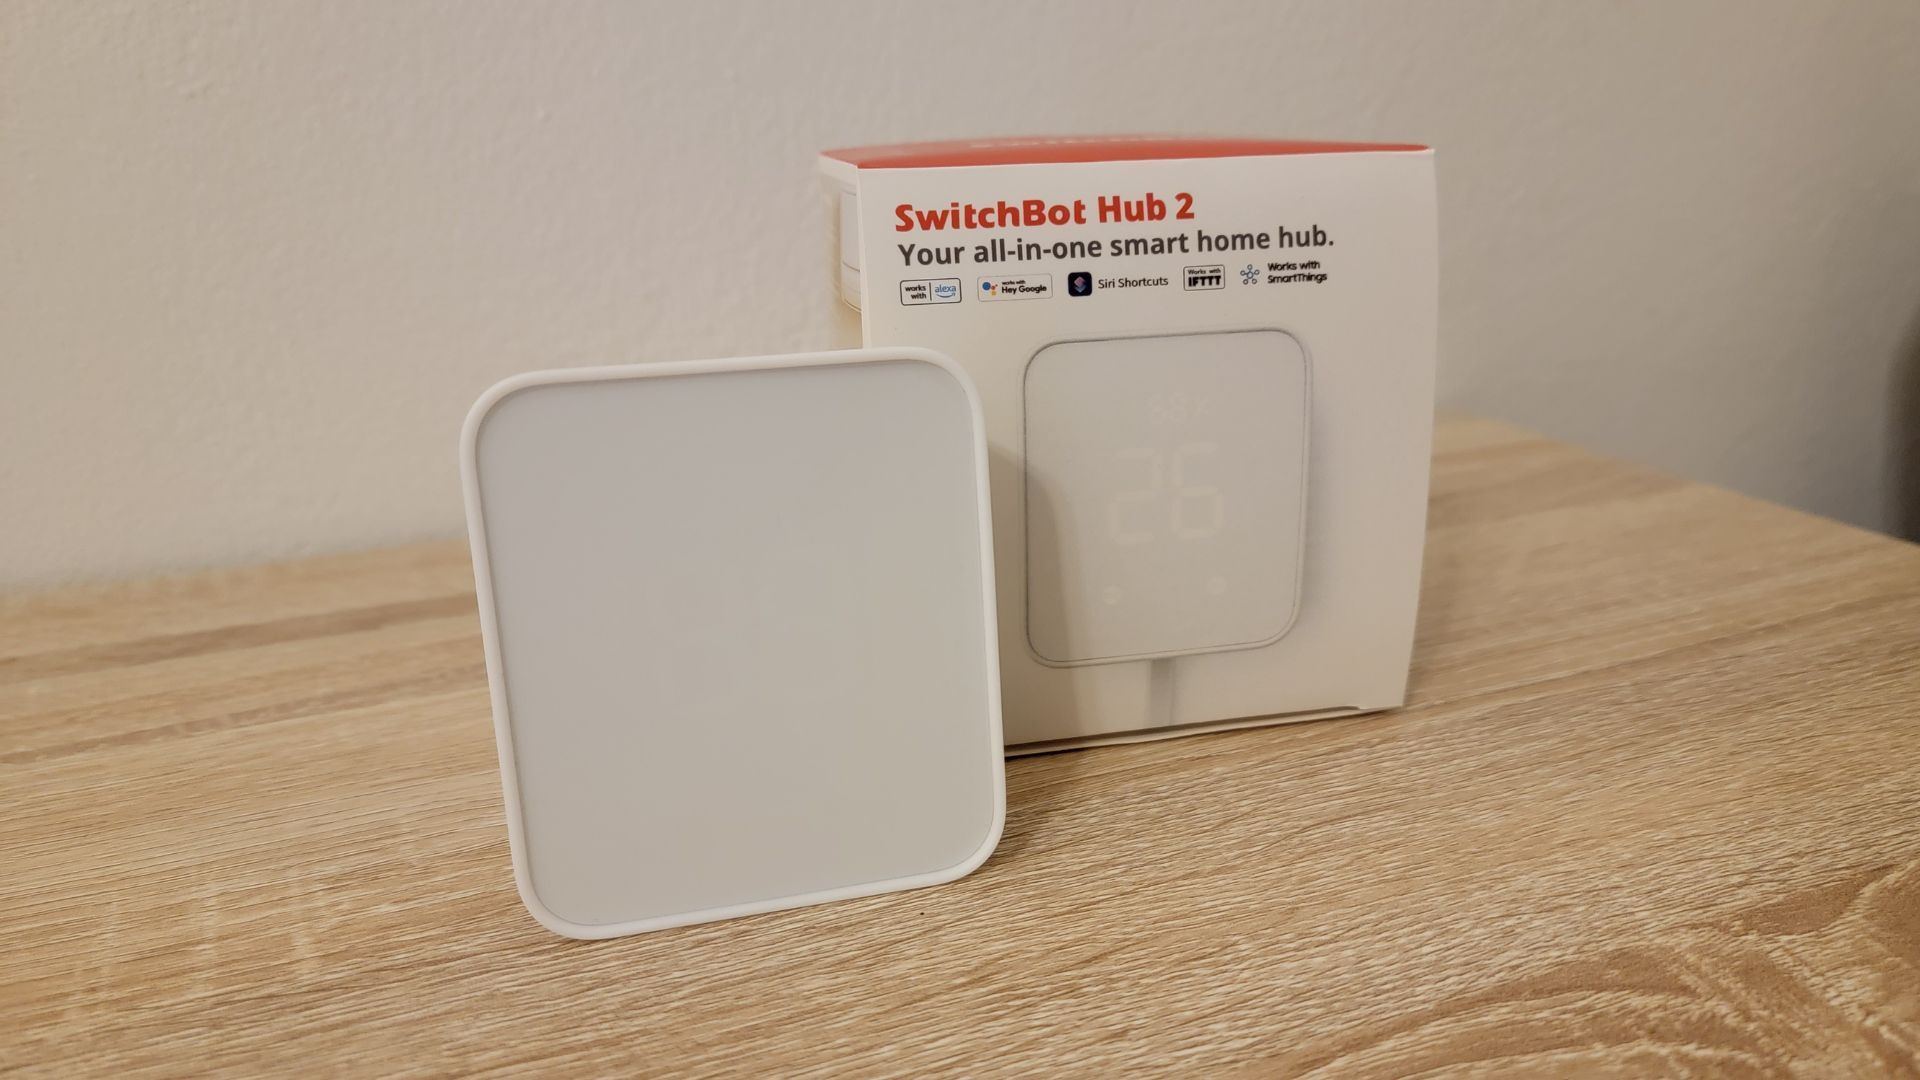 SwitchBot Hub 2 turned off sitting next to product box